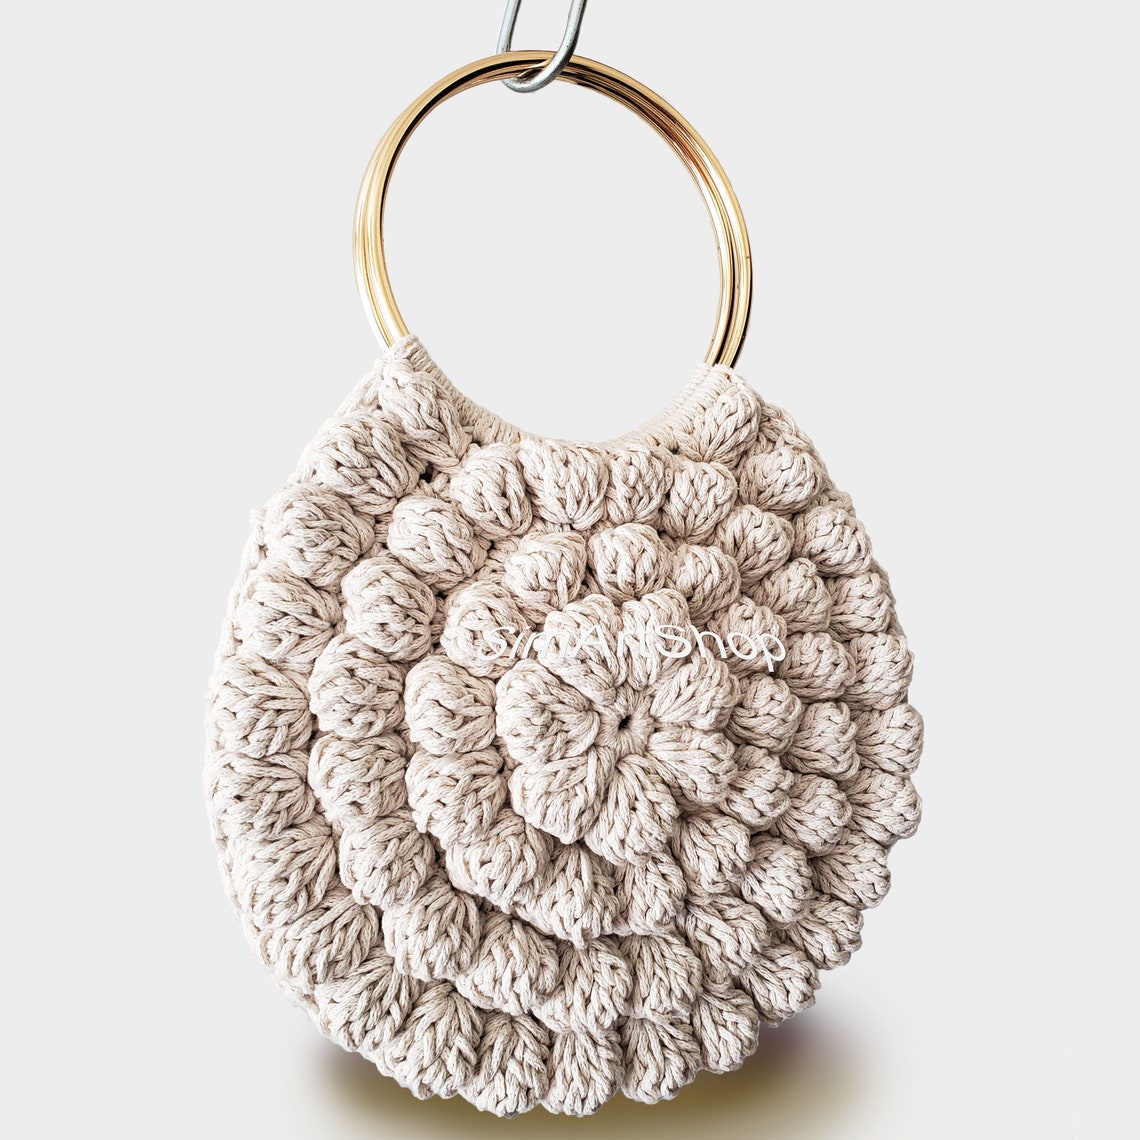 Ulla Johnson Lia Tote Inspired Crochet BagCream Tote with | Etsy